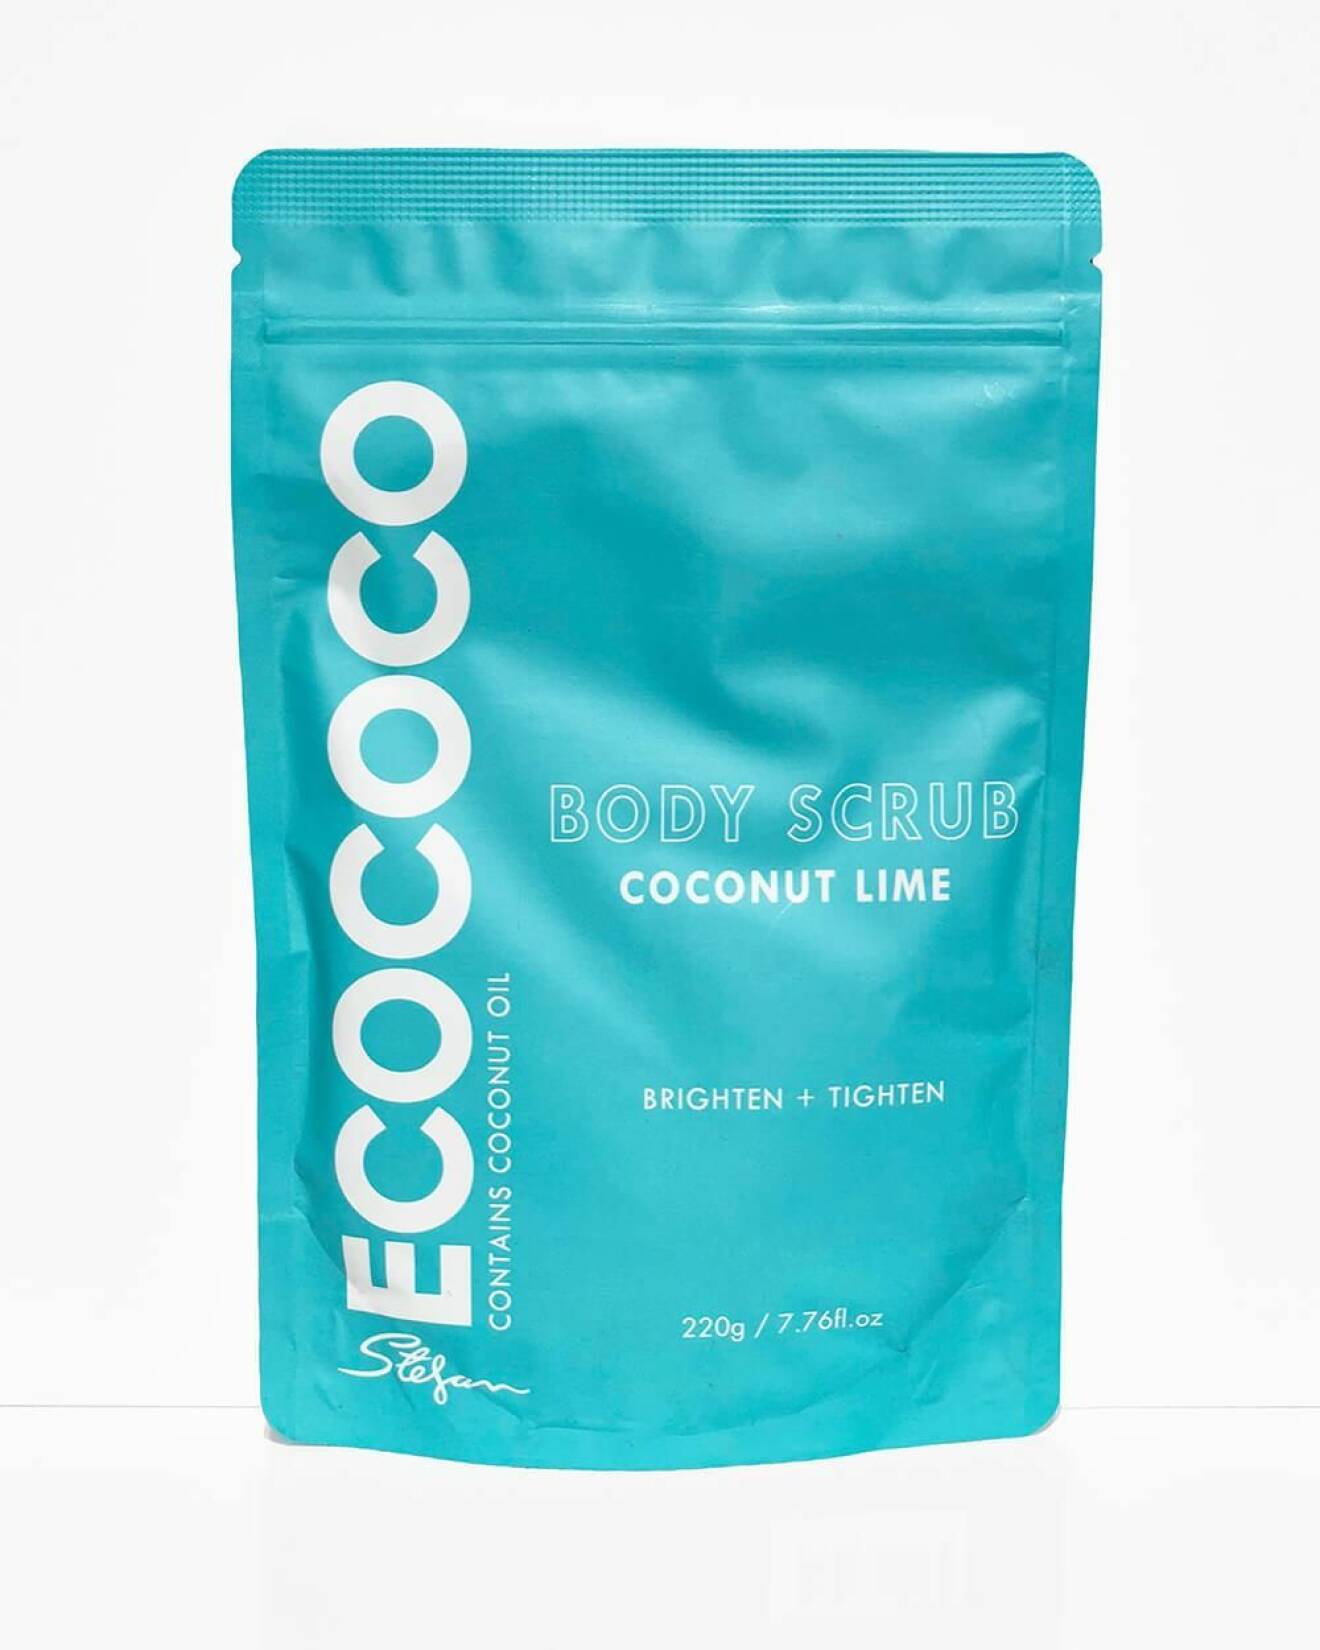 Kroppsskrubb från Eco Coco.